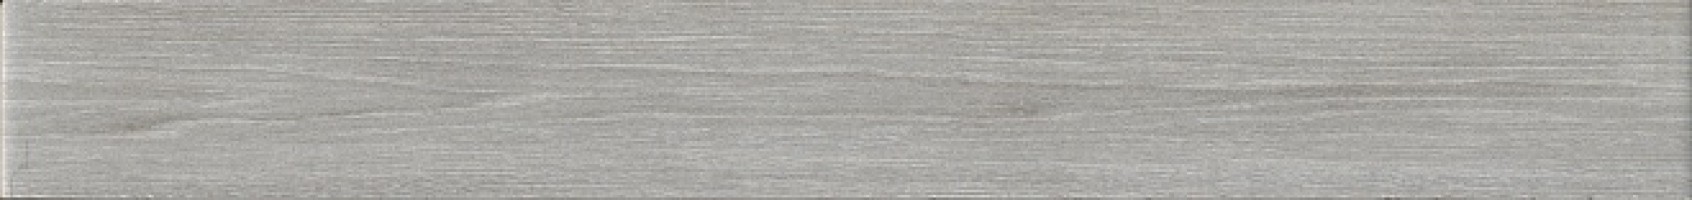 Кассетоне серый светлый матовый 30.2x3.5 VT/A367/SG9174